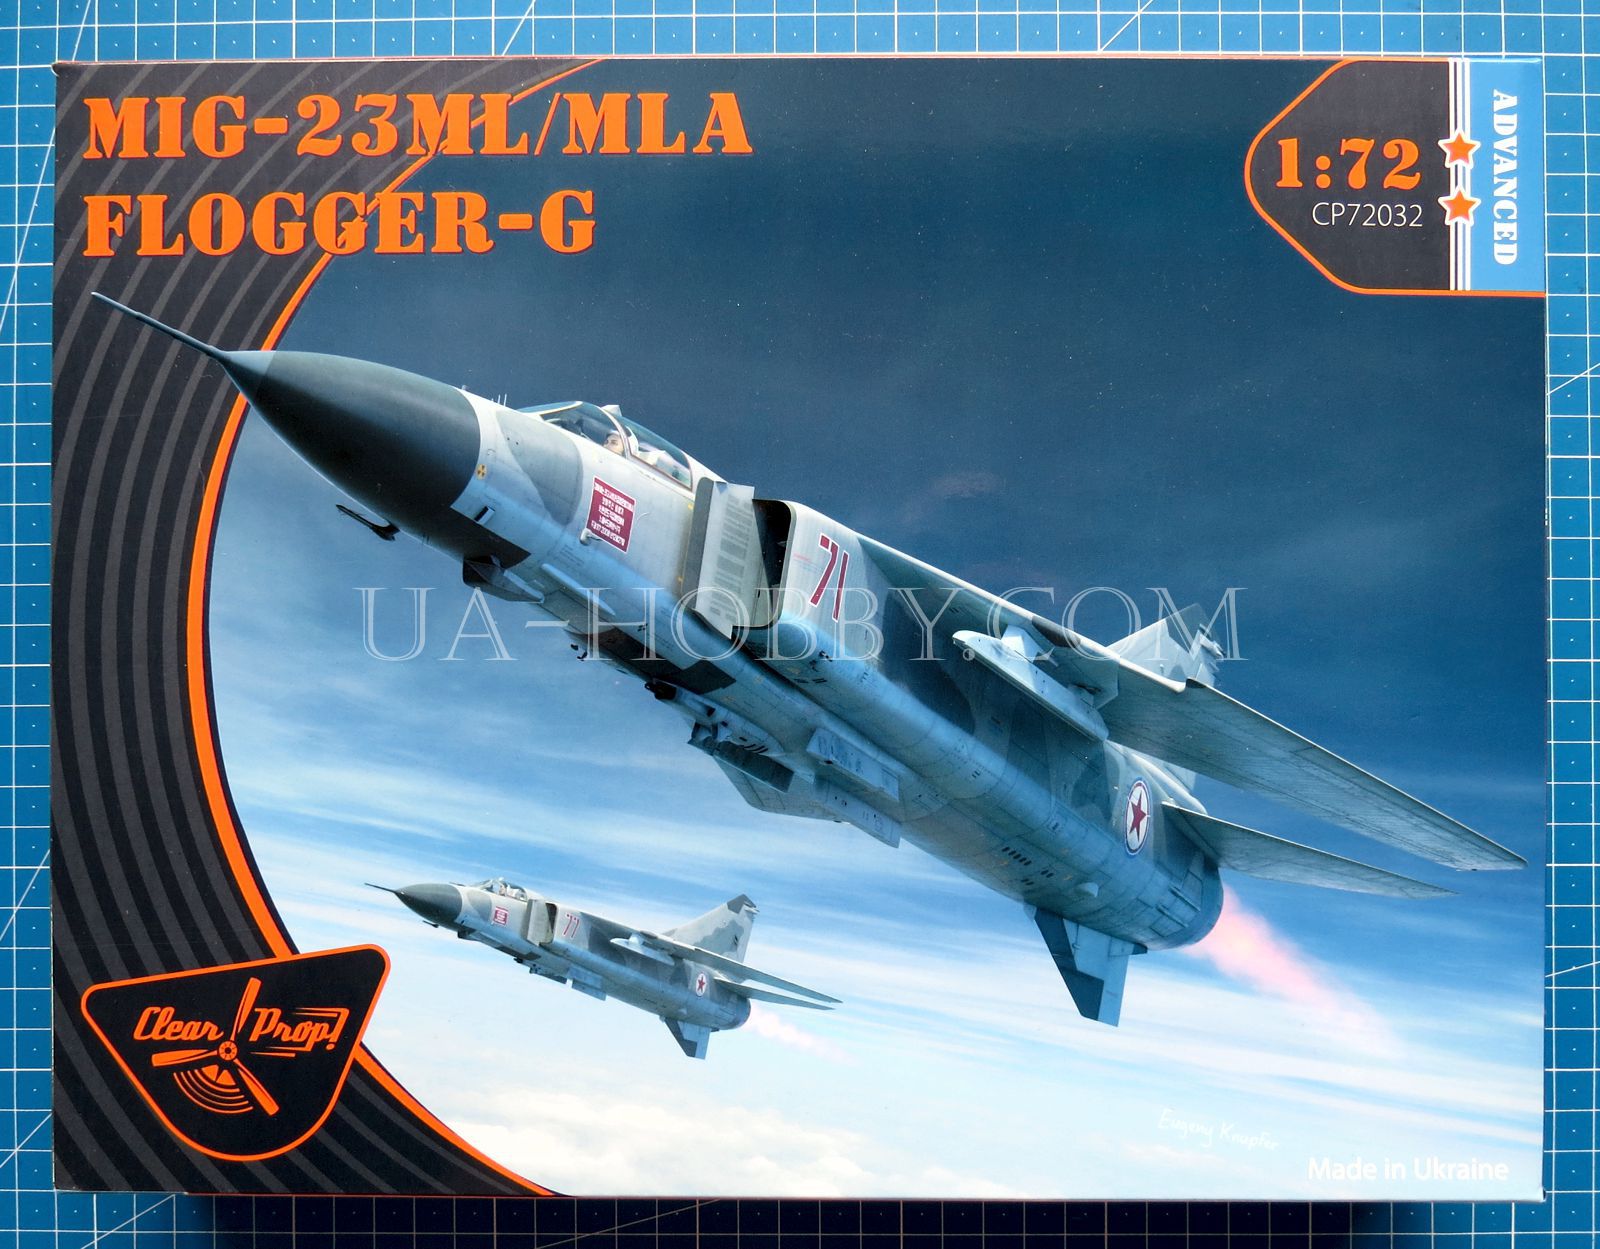 1/72 MiG-23ML/MLA Flogger-G. Clear Prop! CP72032